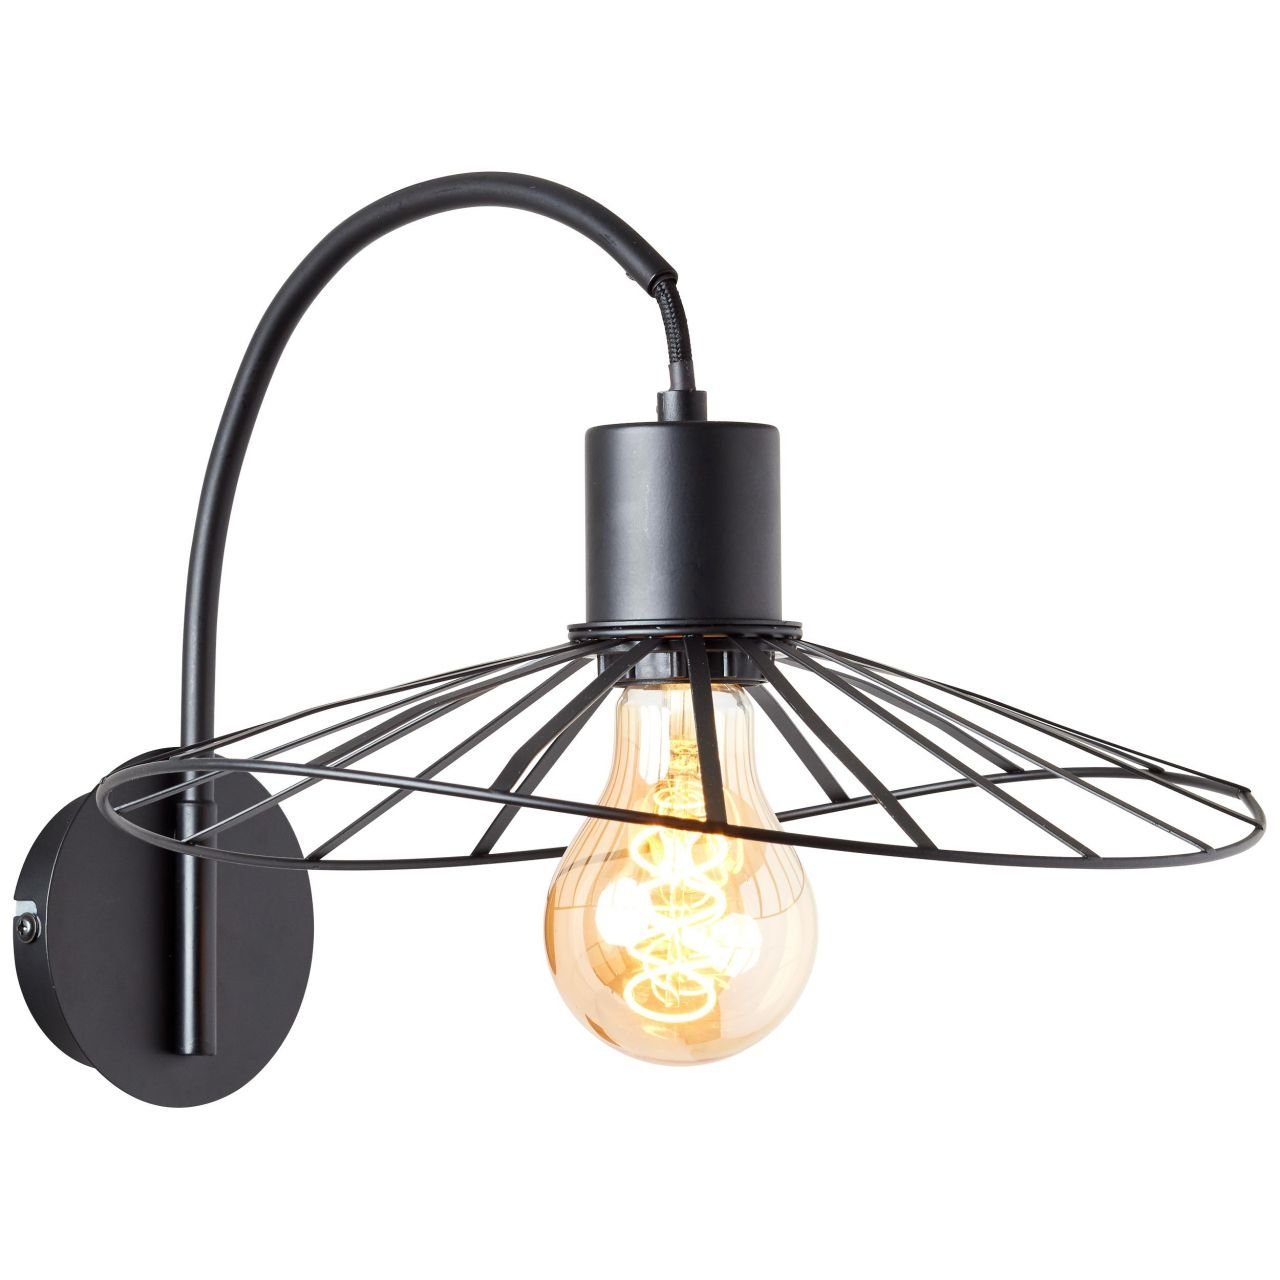 Lampe, schwarz Wandleuchte 52W, Brilliant Leika matt, Leika, E27, 1x LED-Leuch Wandleuchte Für A60,